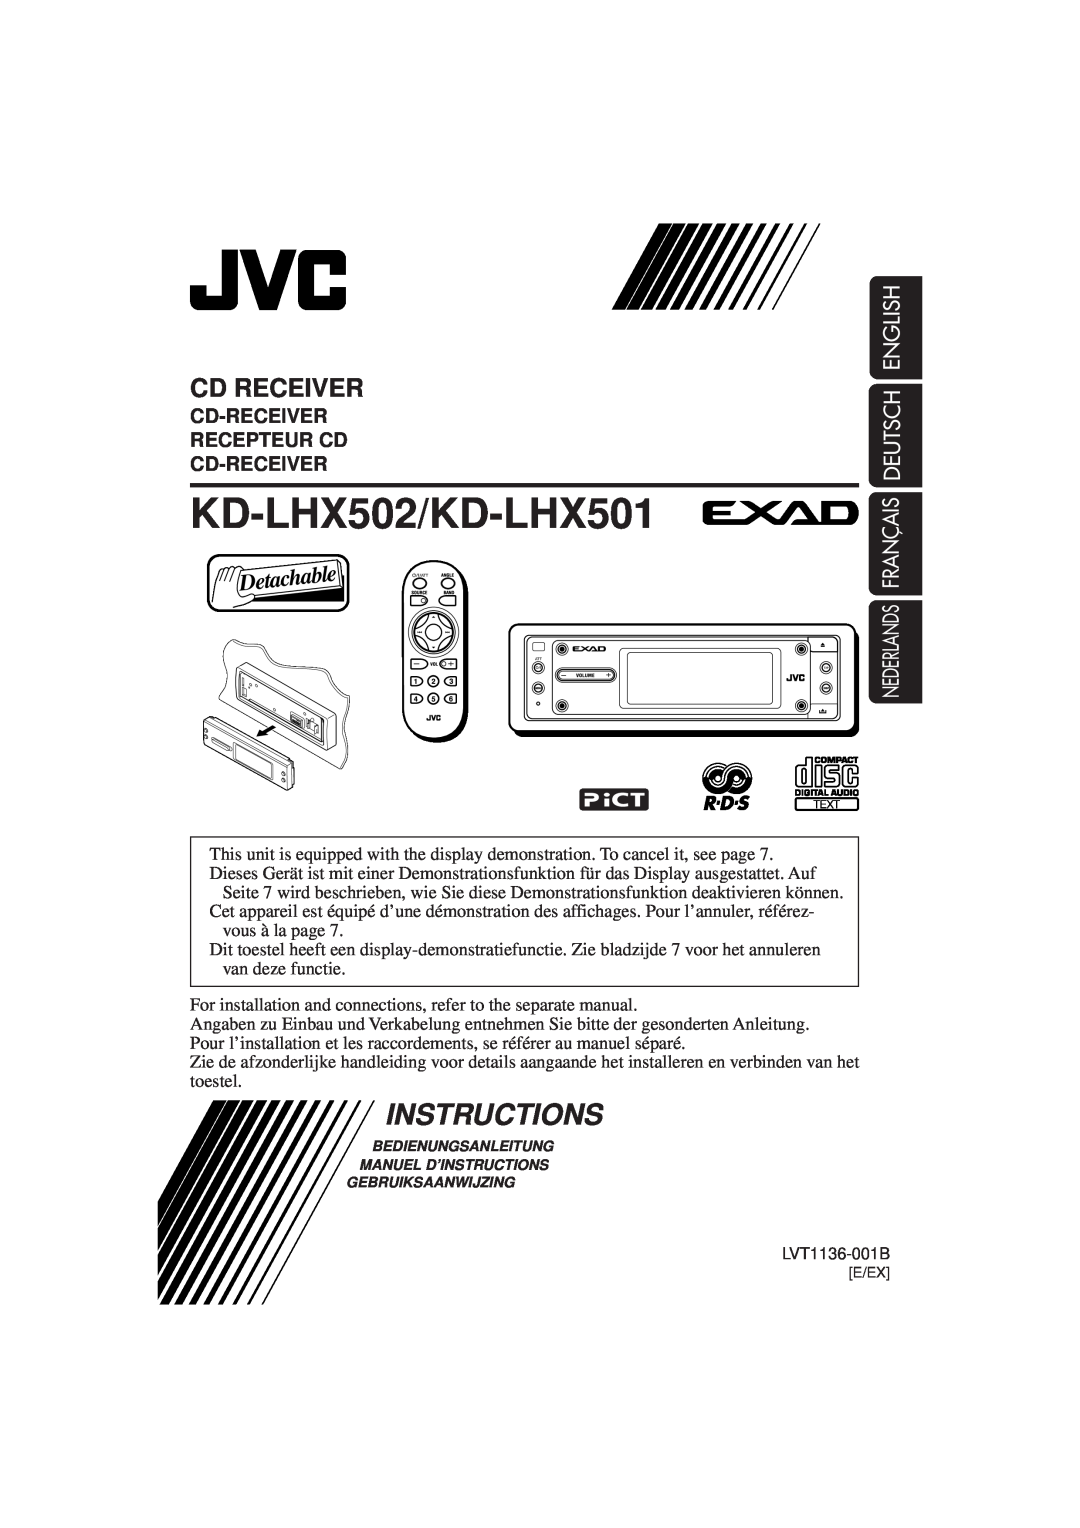 JVC manual Cd-Receiver Recepteur Cd Cd-Receiver, KD-LHX502/KD-LHX501, Instructions, Cd Receiver 